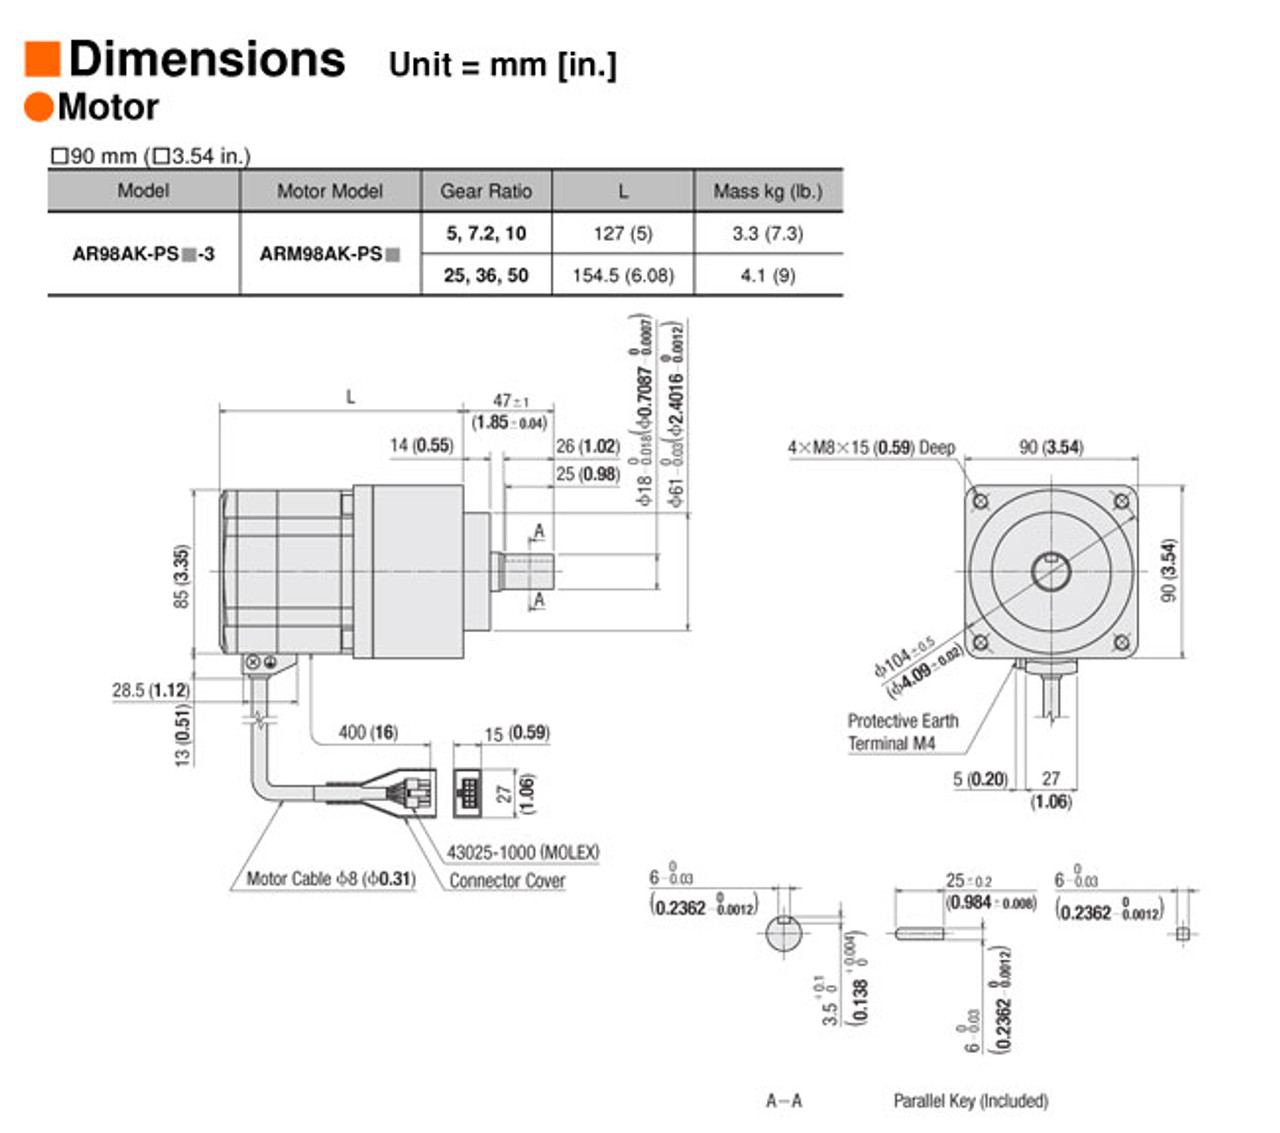 AR98AK-PS10-3 - Dimensions